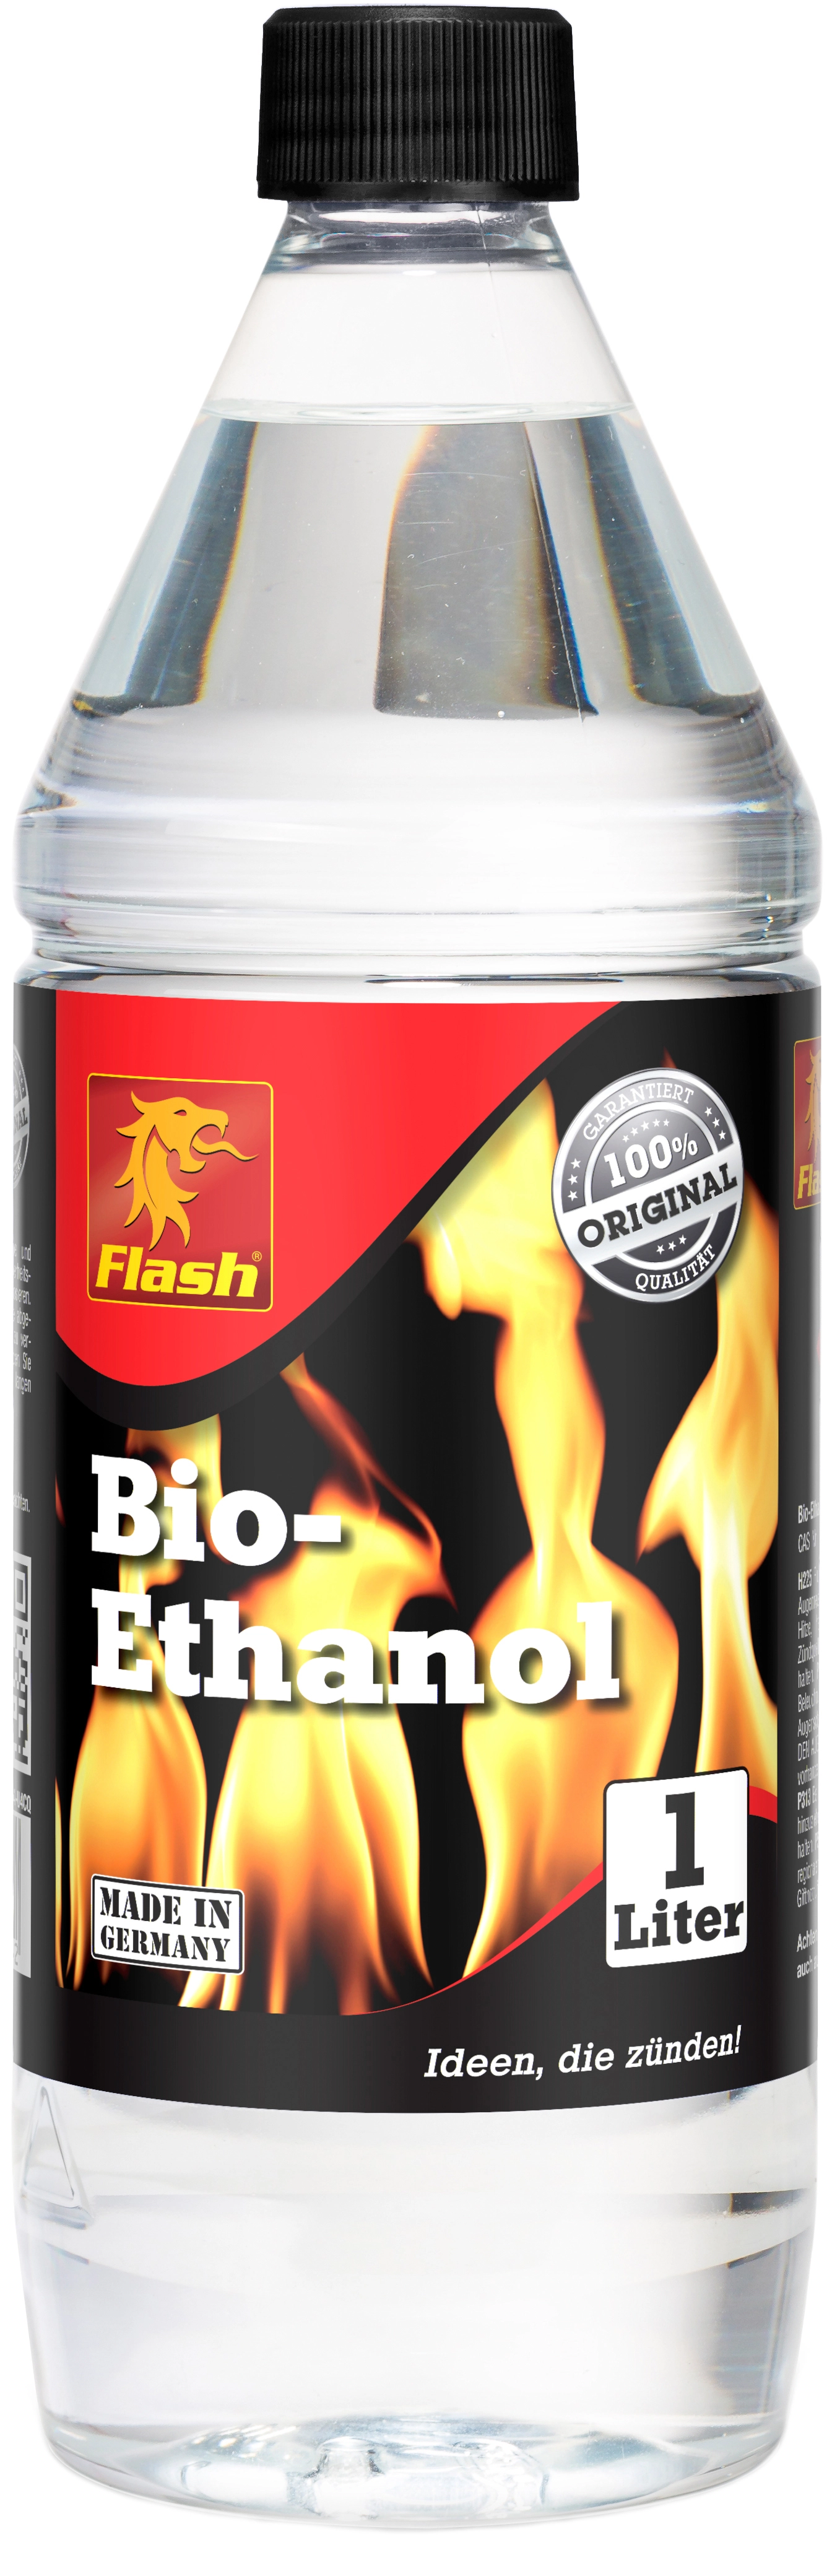 Ethanol kamin kaufen bei OBI